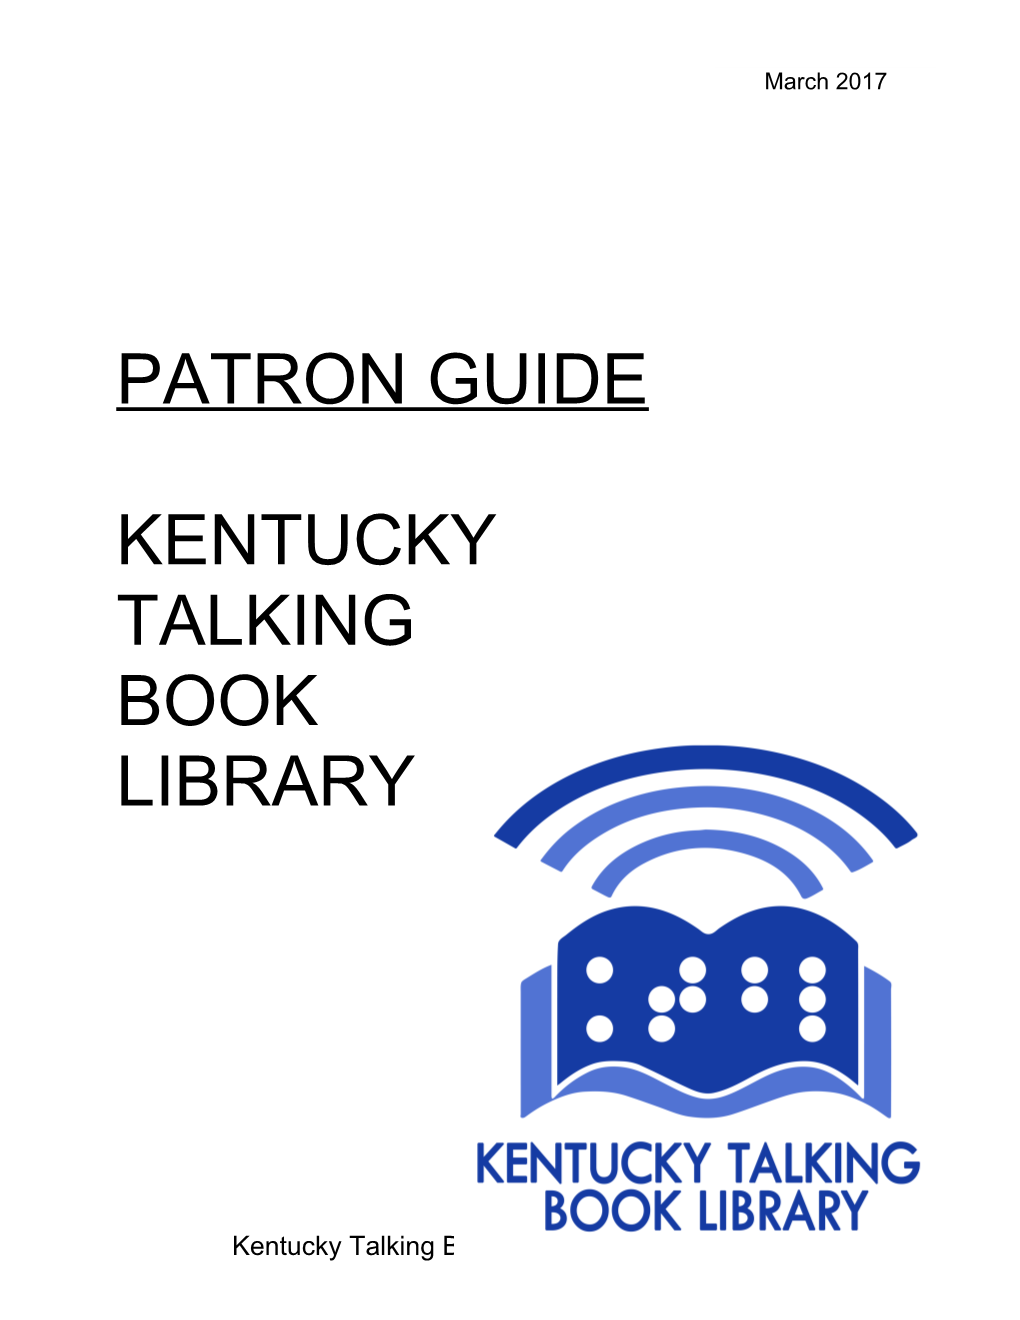 Kentucky Talking Book Library